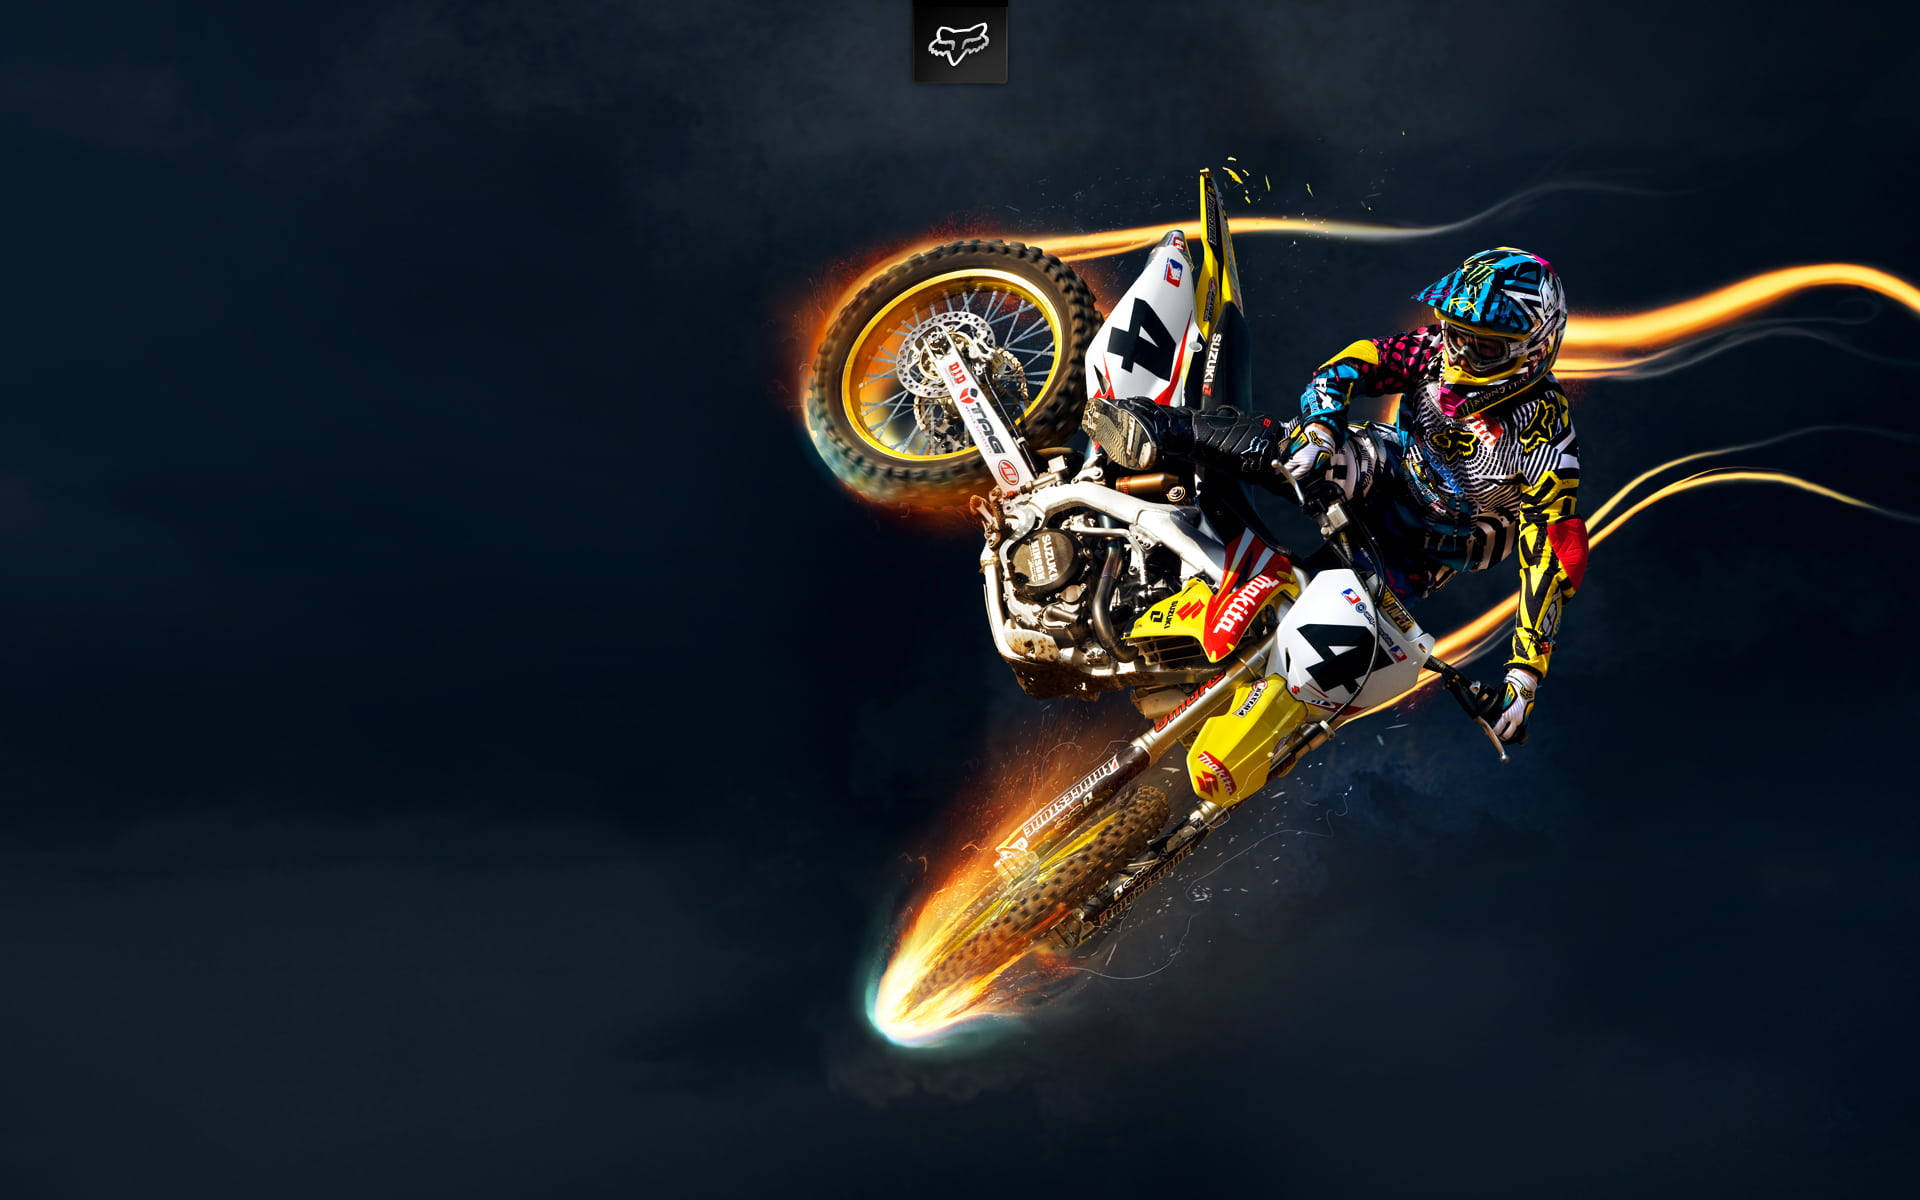 Flaming Motocross Bike on a Dark Background Wallpaper